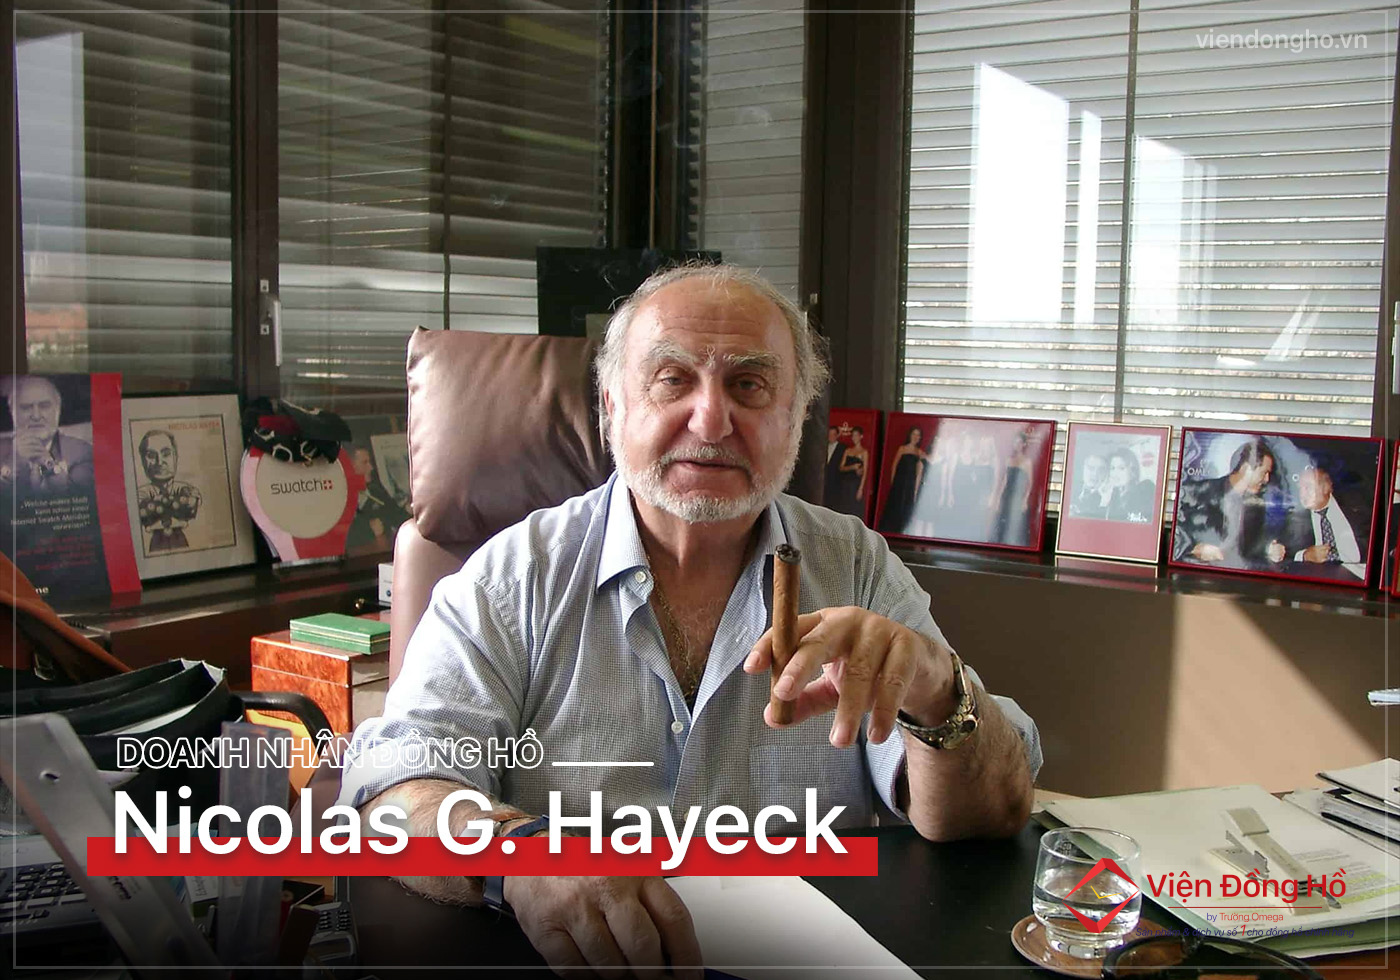 Nicolas G. Hayeck - Nguoi thay doi cuc dien dong ho the gioi 6